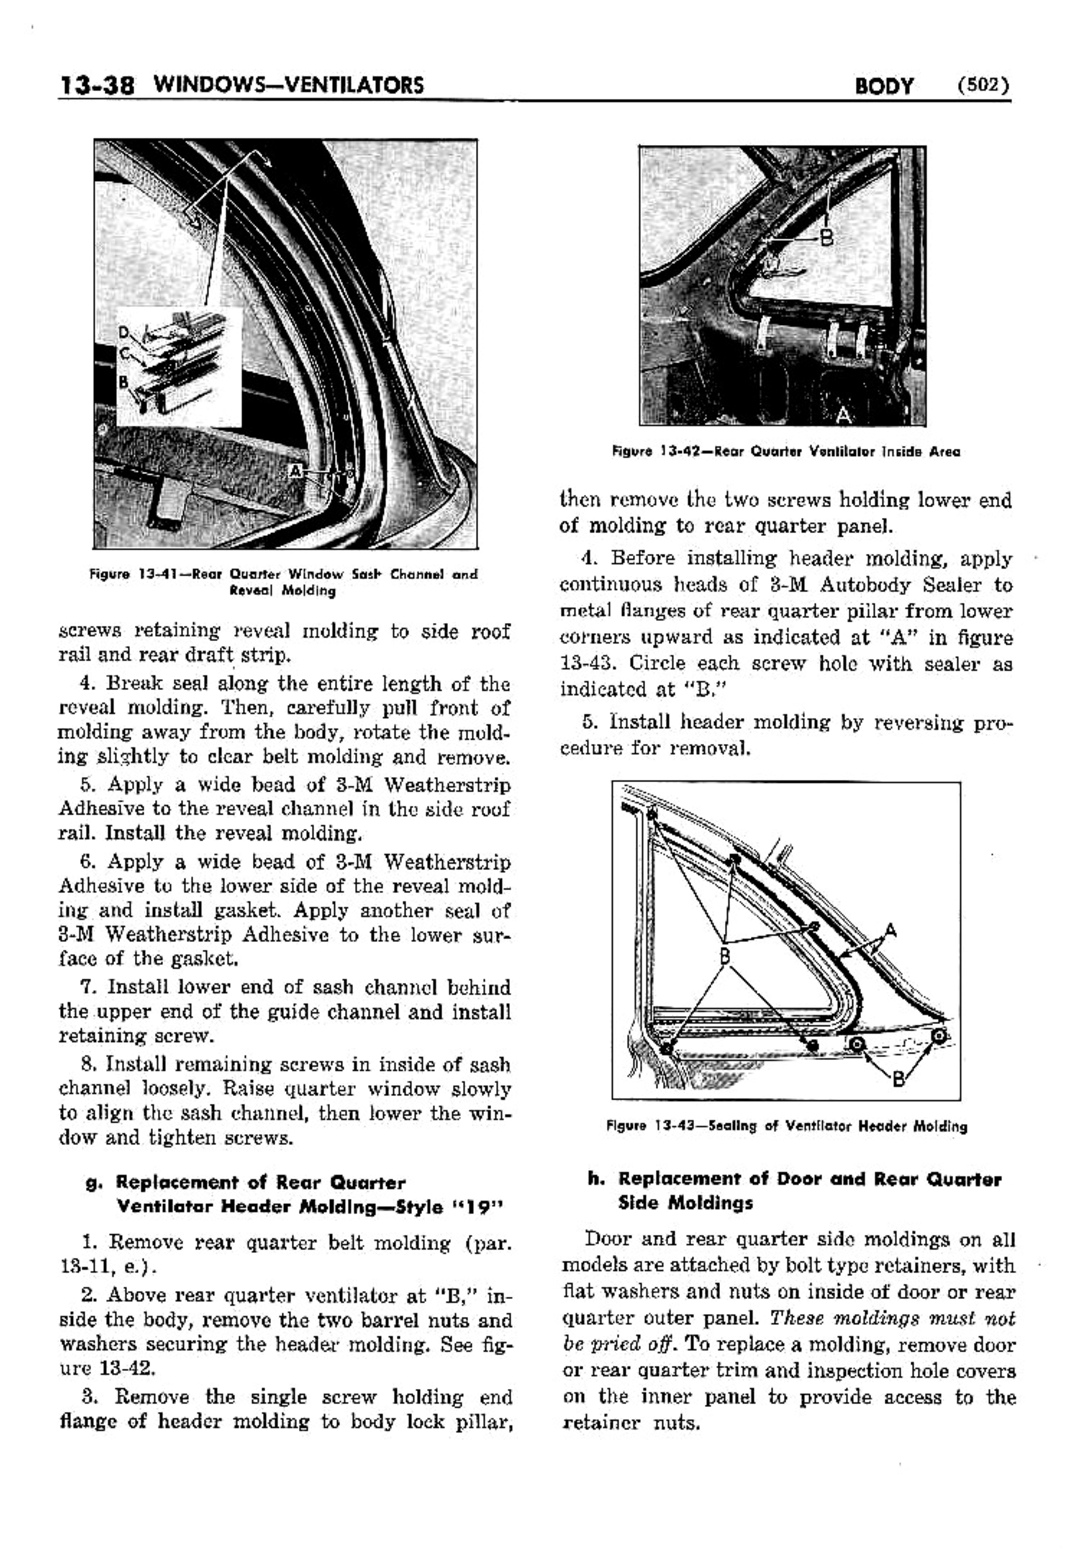 n_14 1952 Buick Shop Manual - Body-038-038.jpg